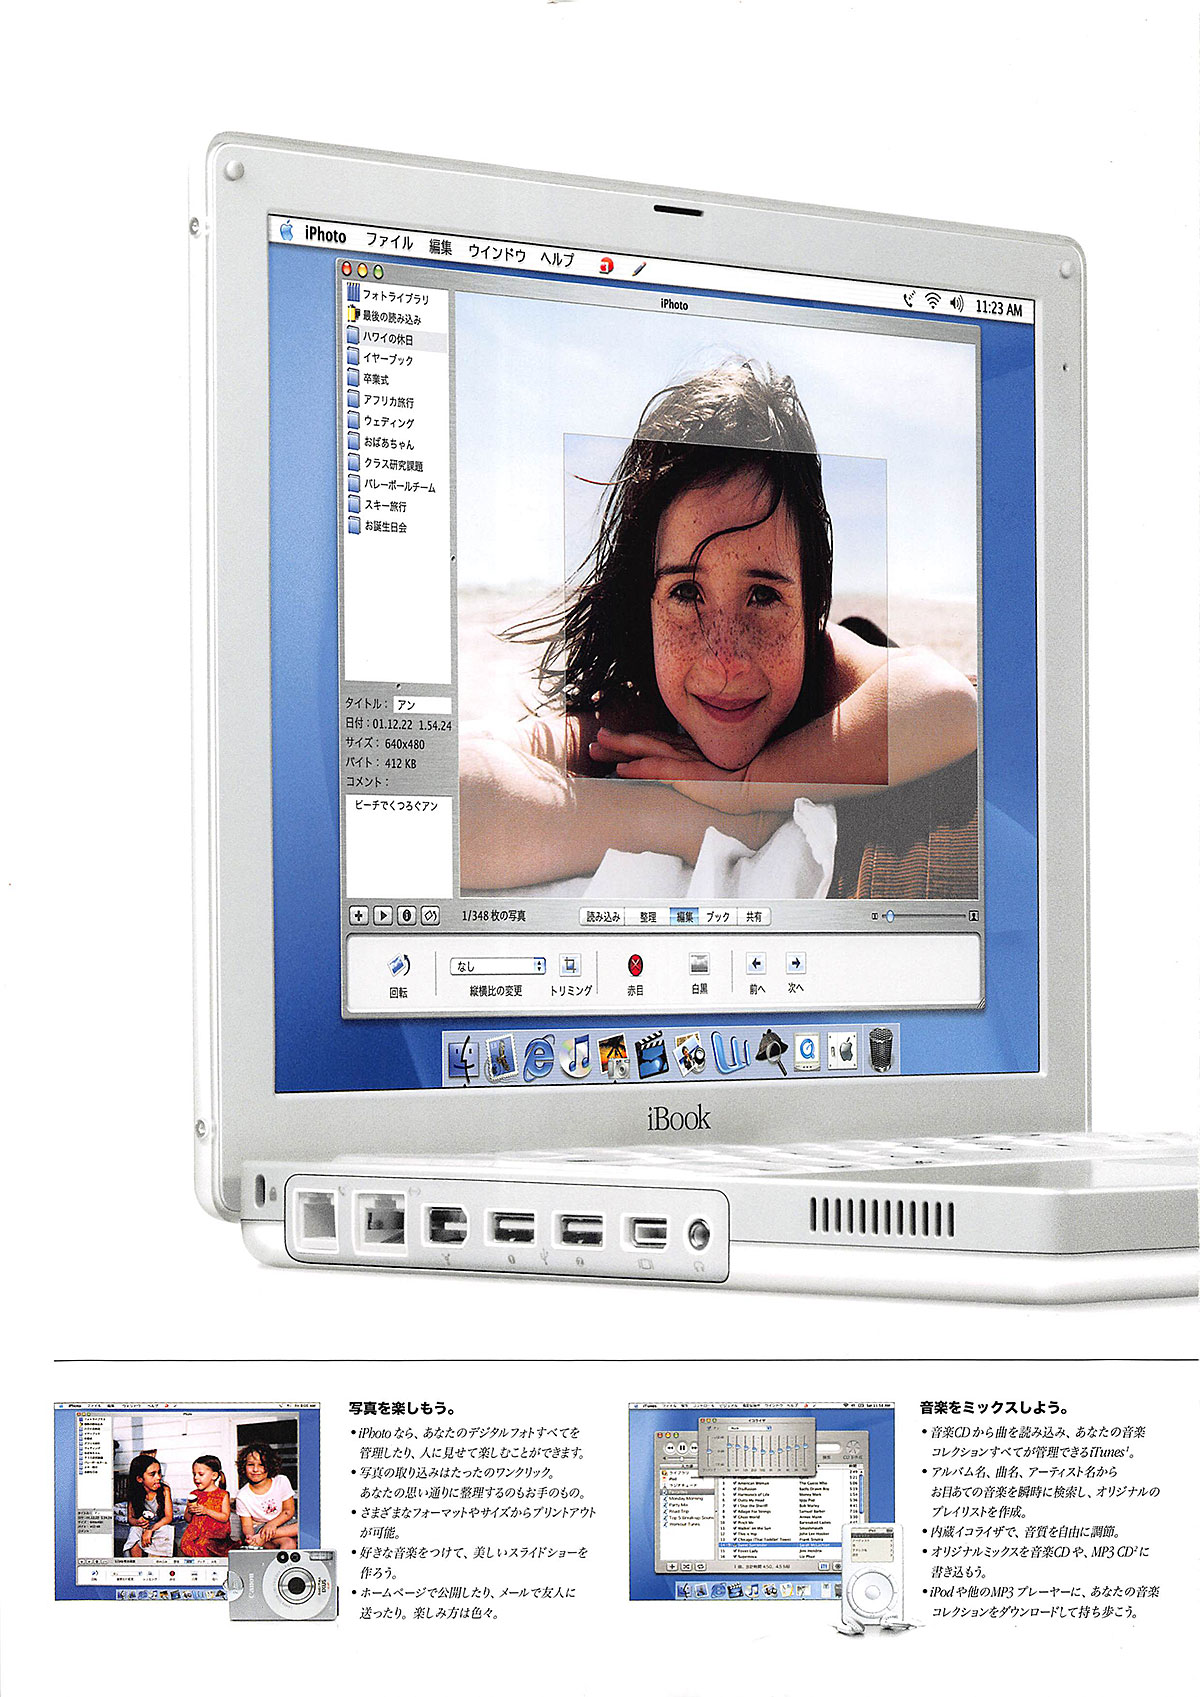 iBook - Apple / MacintoshのカタログApple / Macintoshのカタログ